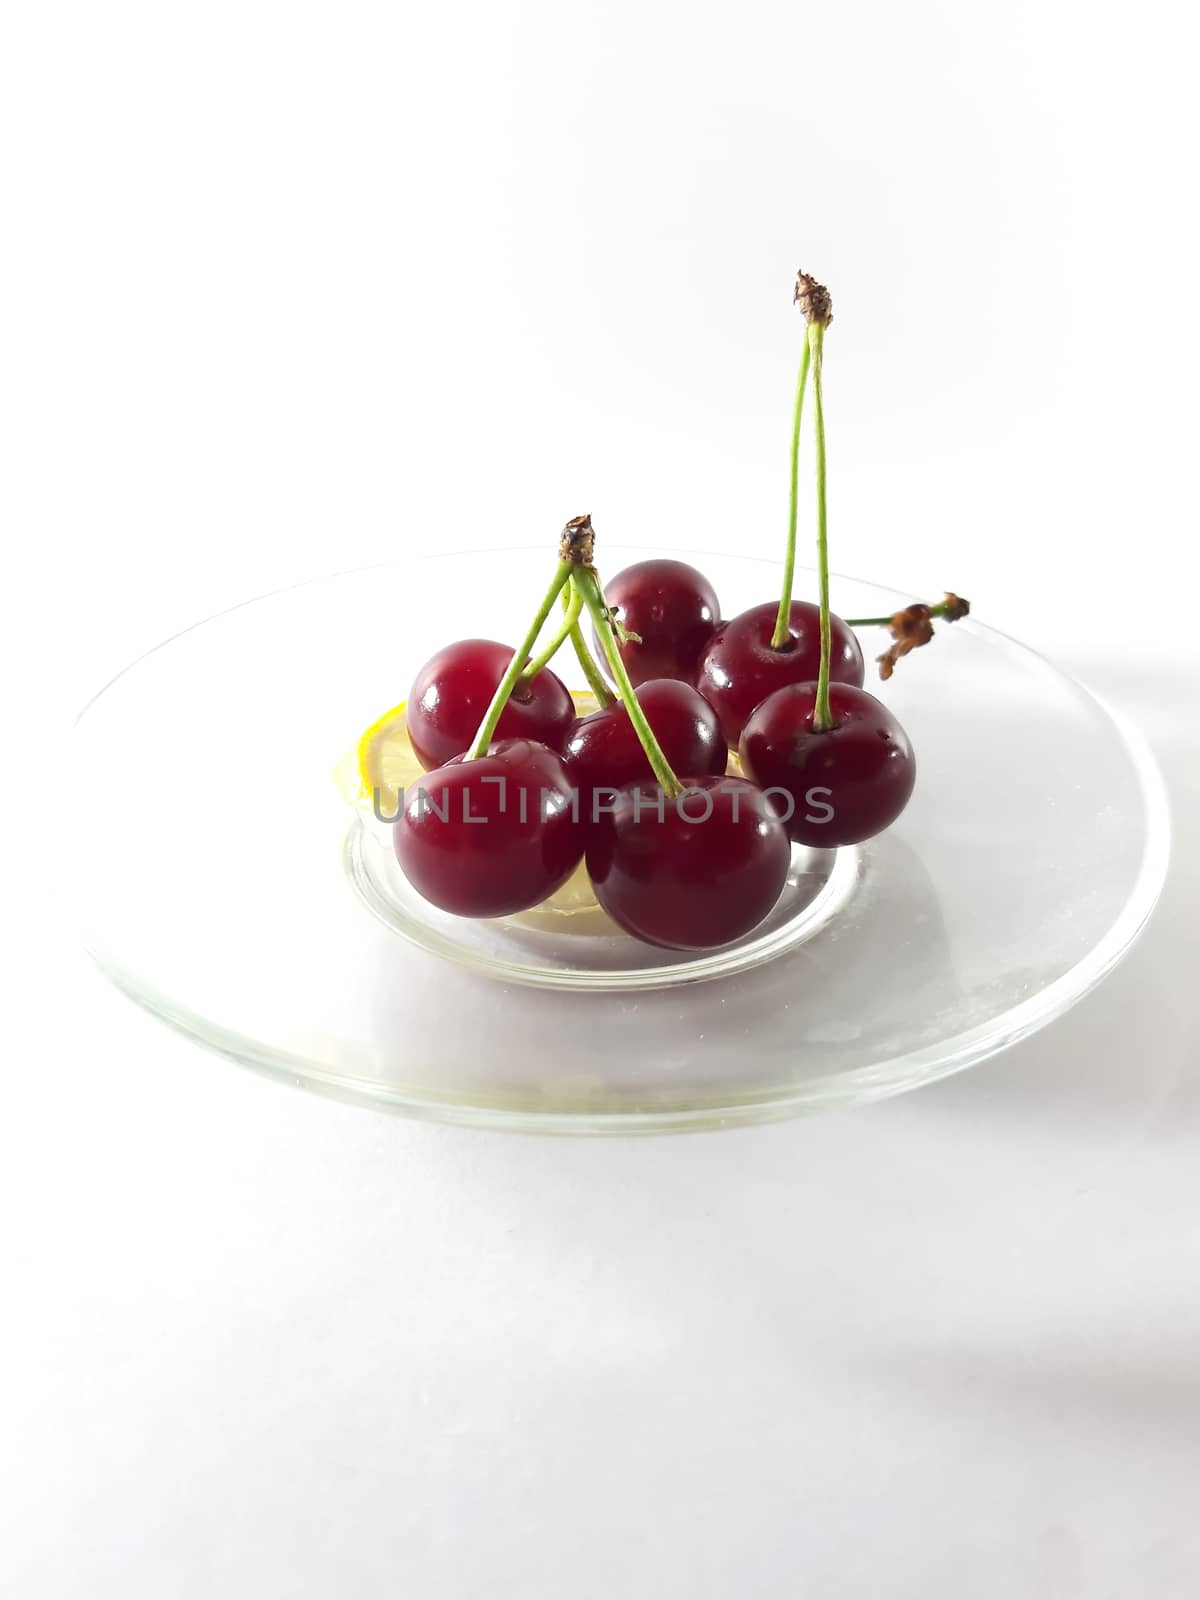 Photo cherry and lemon. Healthy food. Vegetarian red food. Berri by polyachenkovv@gmail.com